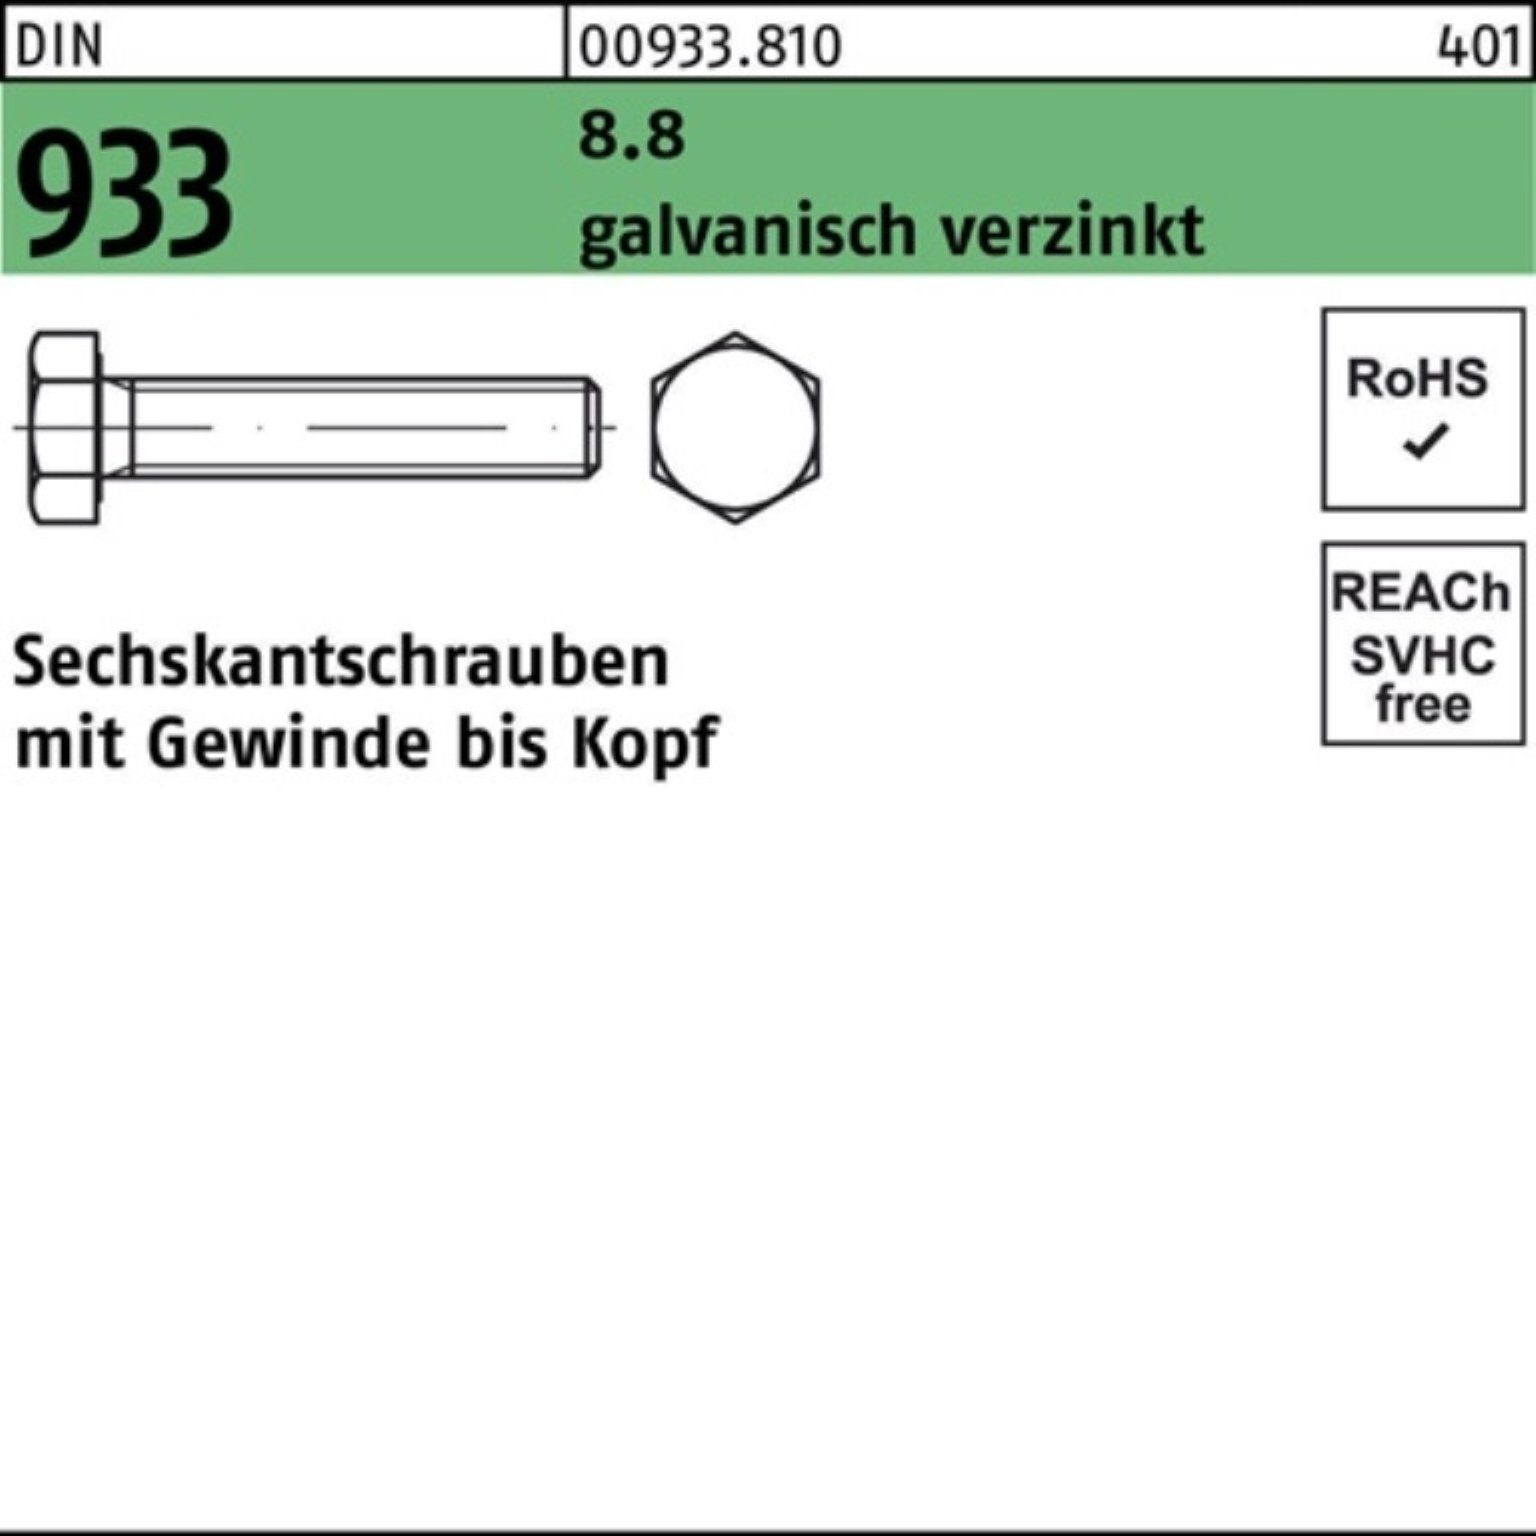 Reyher Sechskantschraube 100er Pack M12x 100 VG 60 DIN St 933 galv.verz. Sechskantschraube 8.8